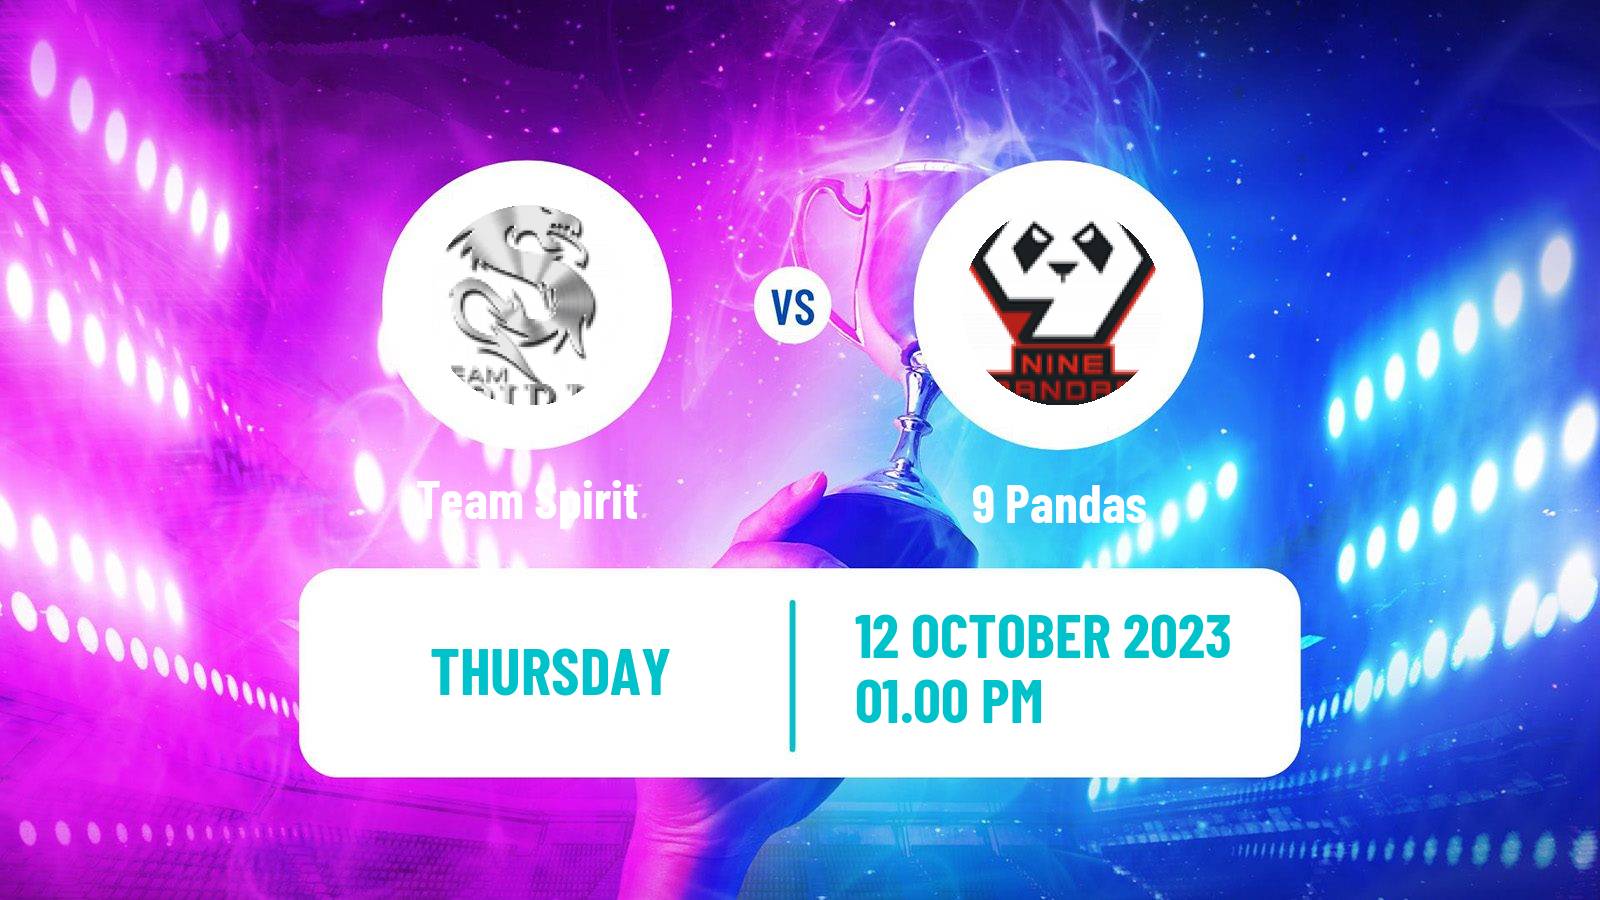 Esports Dota 2 The International Team Spirit - 9 Pandas